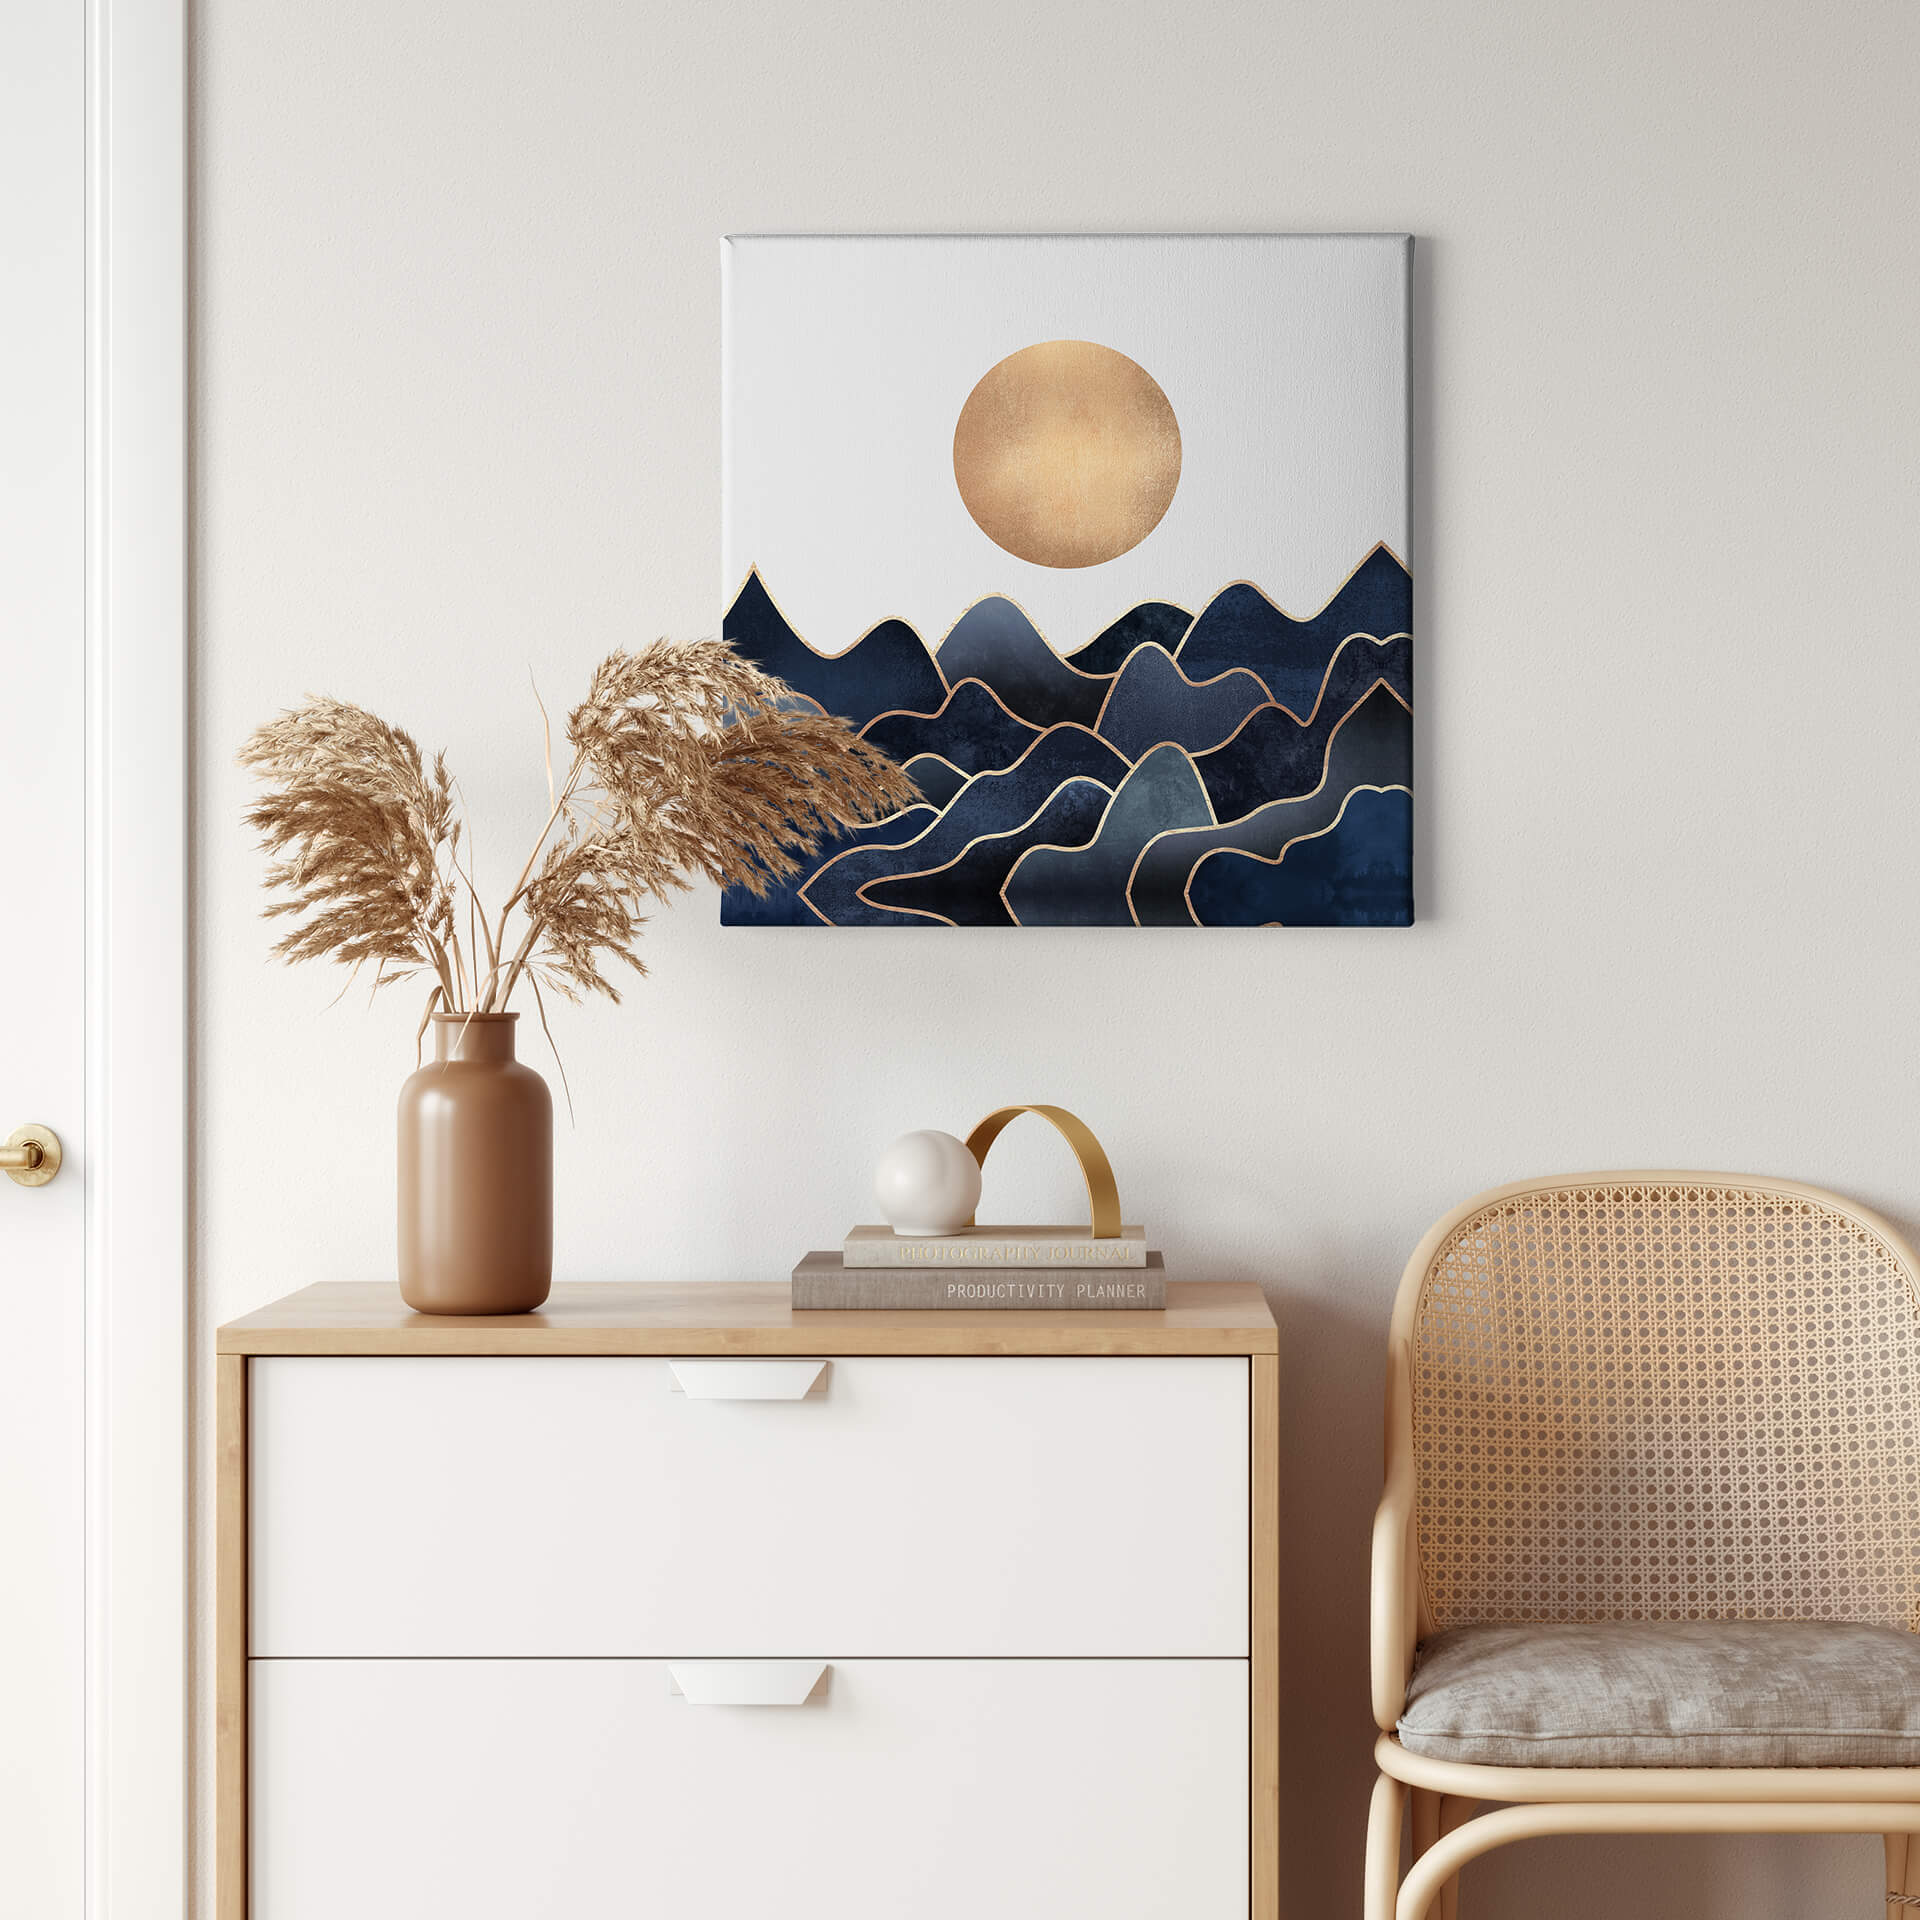 LEINWAND WAVES AND SUN Fredriksson 50 x 50 cm